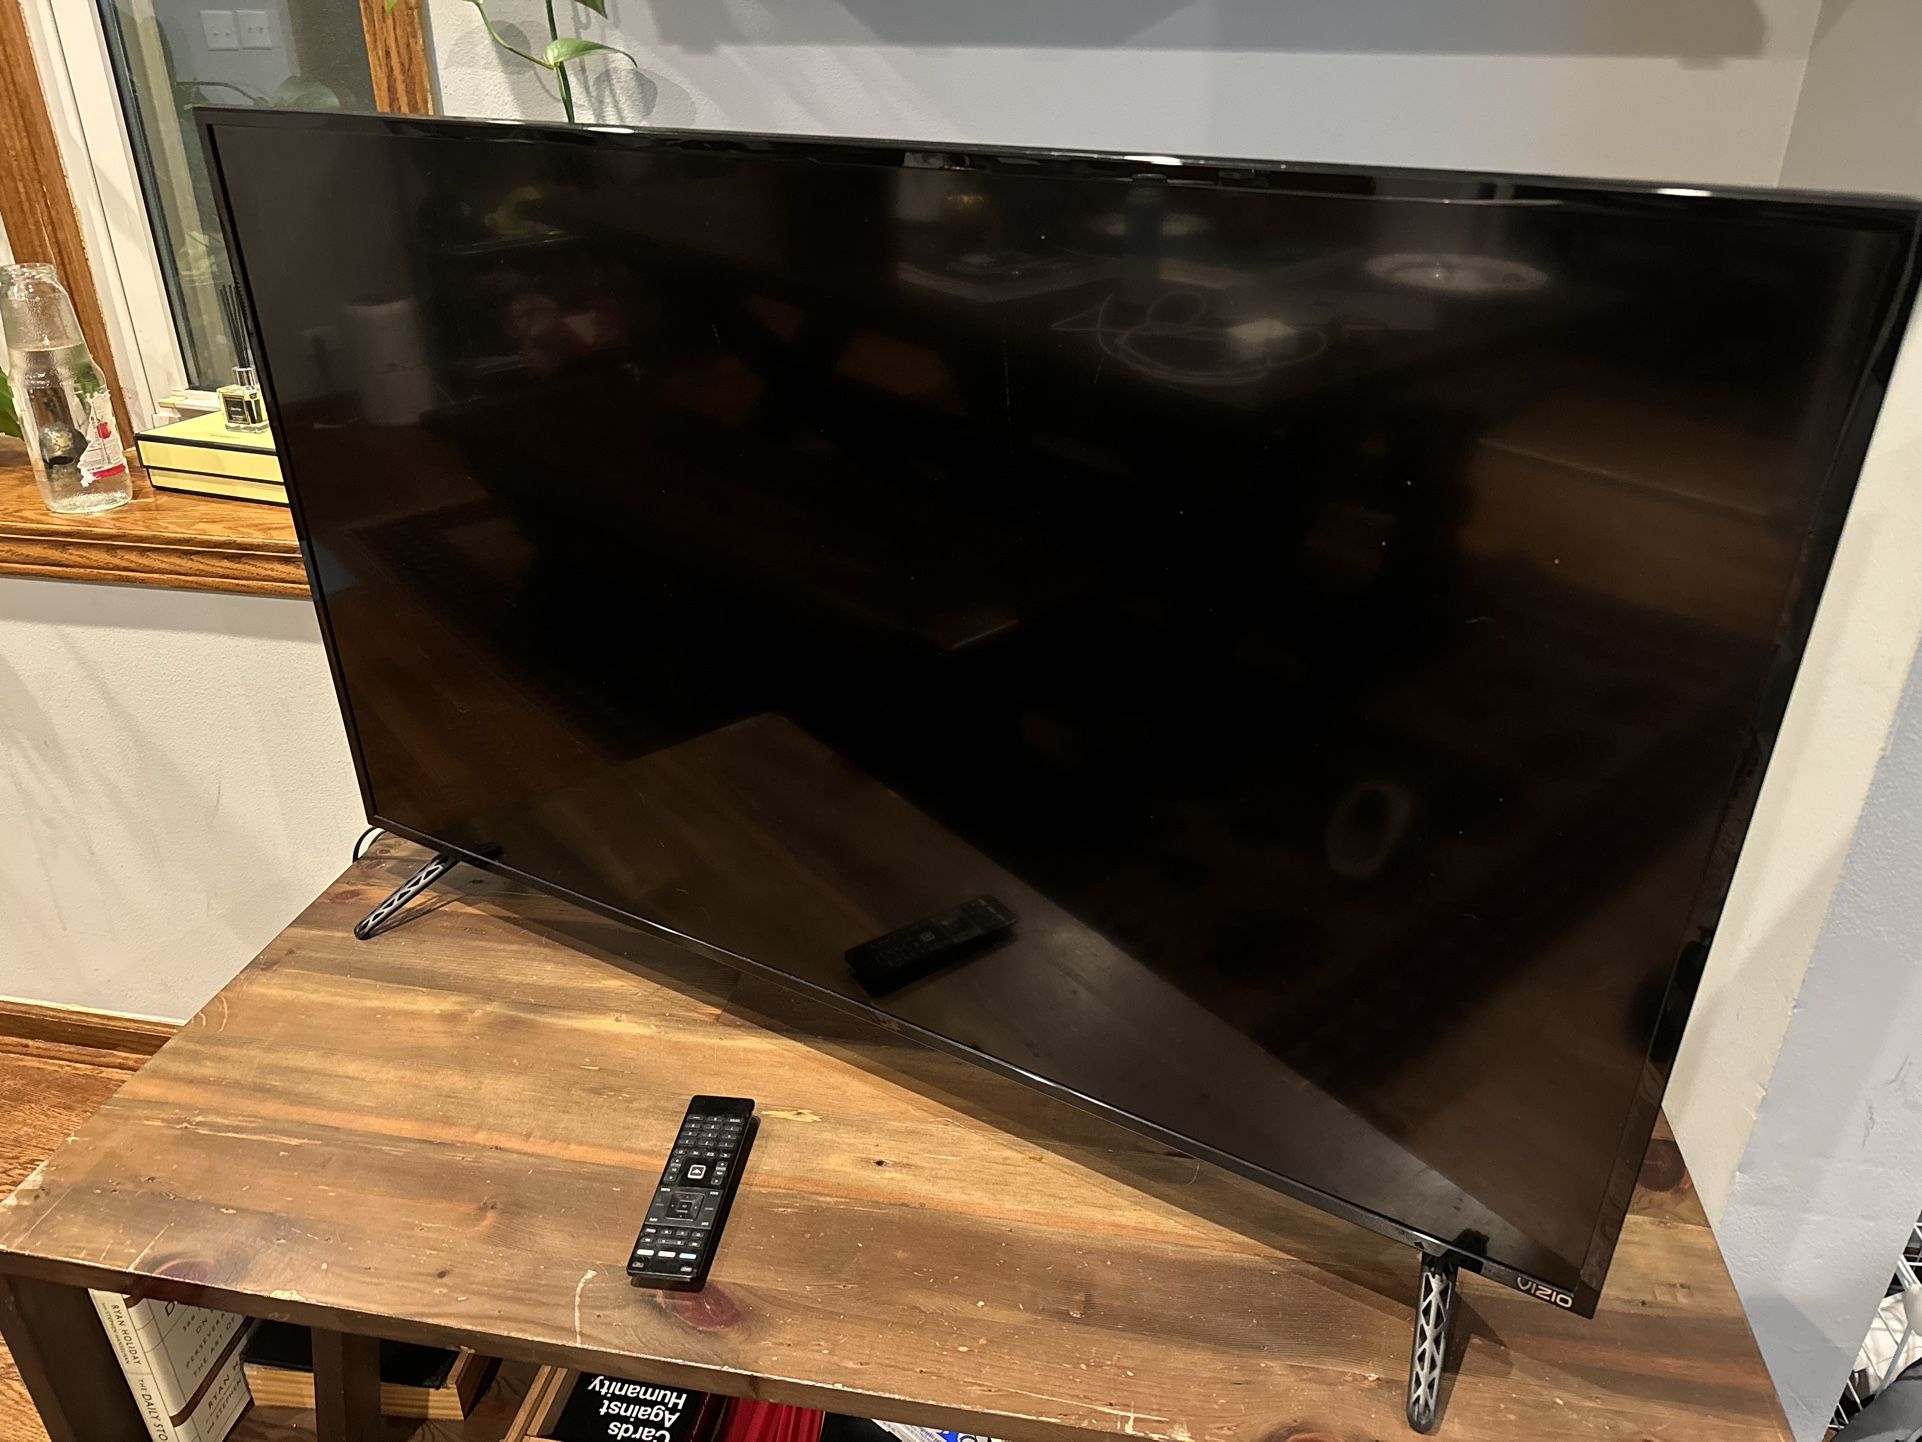 Vizio smart TV 50” + Chromecast Device